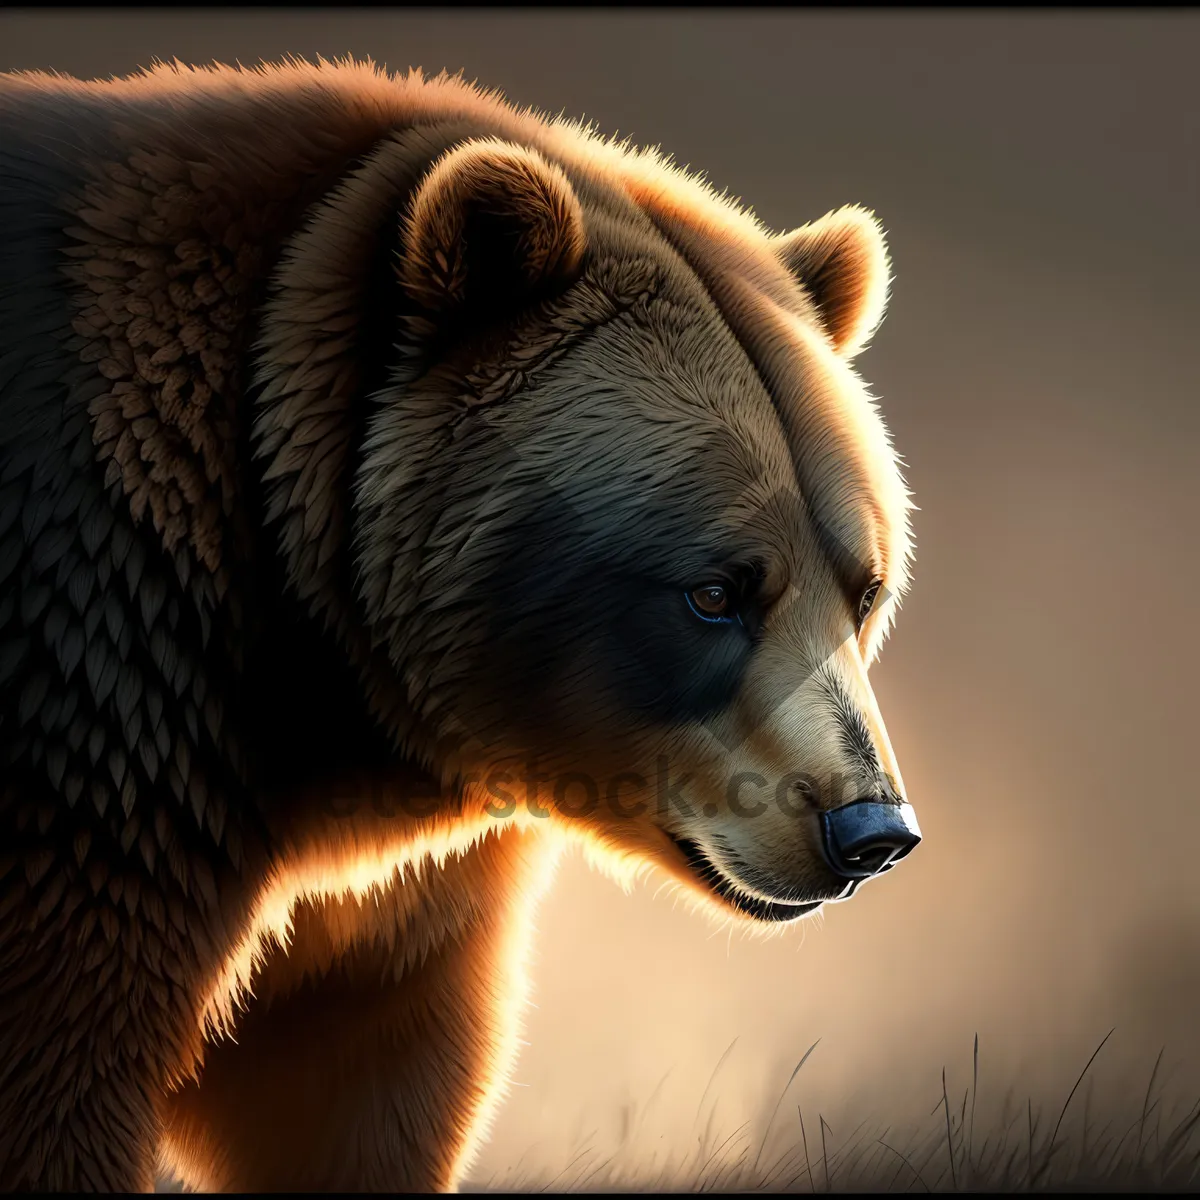 Picture of Wild Brown Bear in Zoo - Majestic Predator